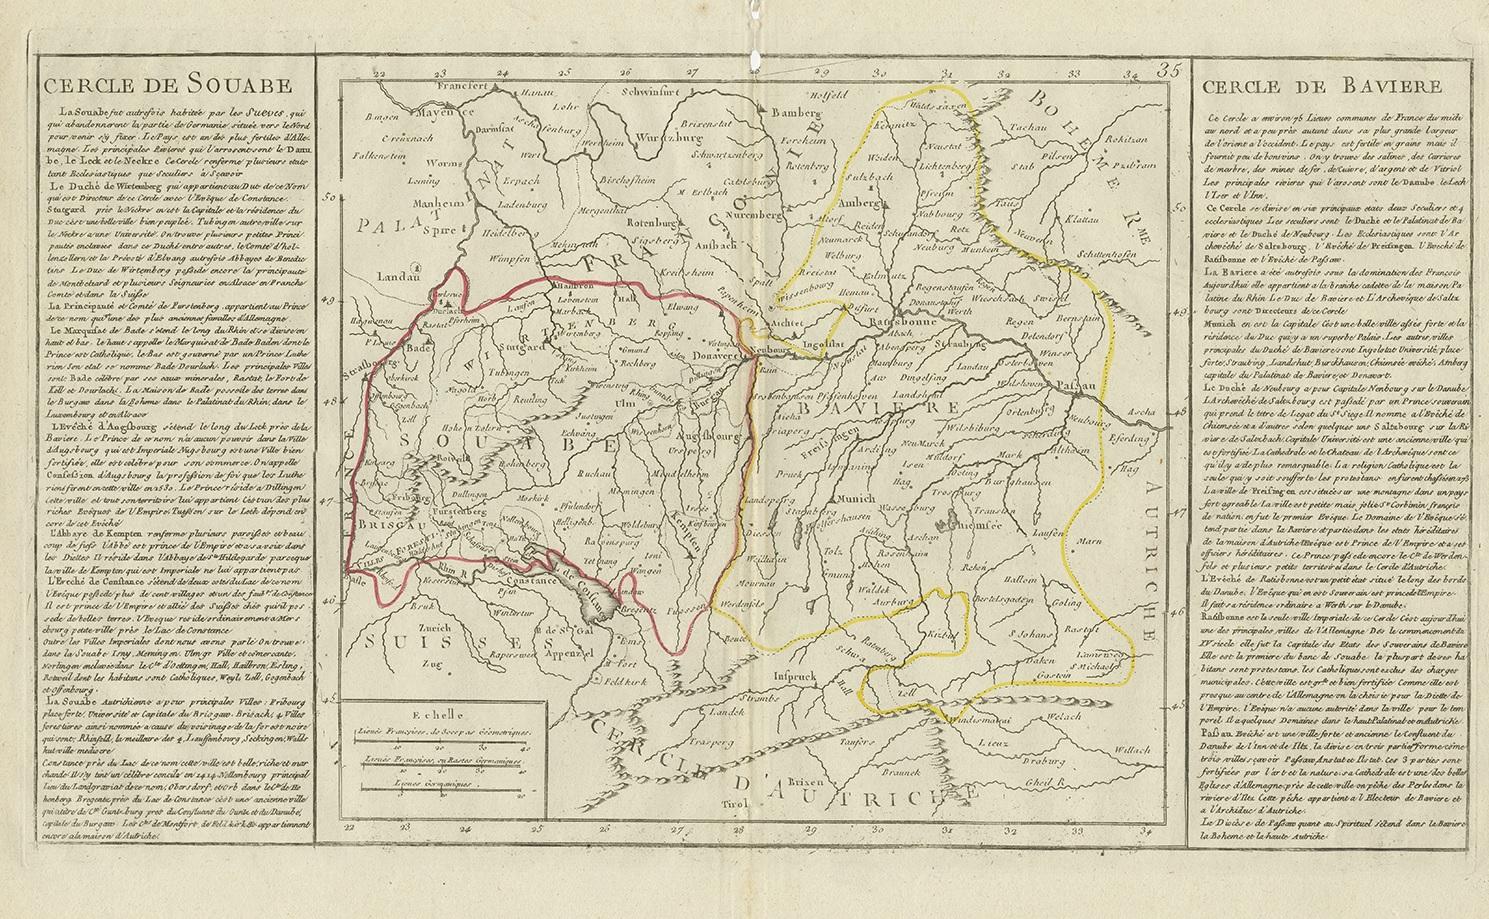 Antique map titled 'Cercle de Souabe'. Antique map of Swabia, Germany. Originates from 'Geographie moderne avec une introduction' by J.B.L. Clouet.